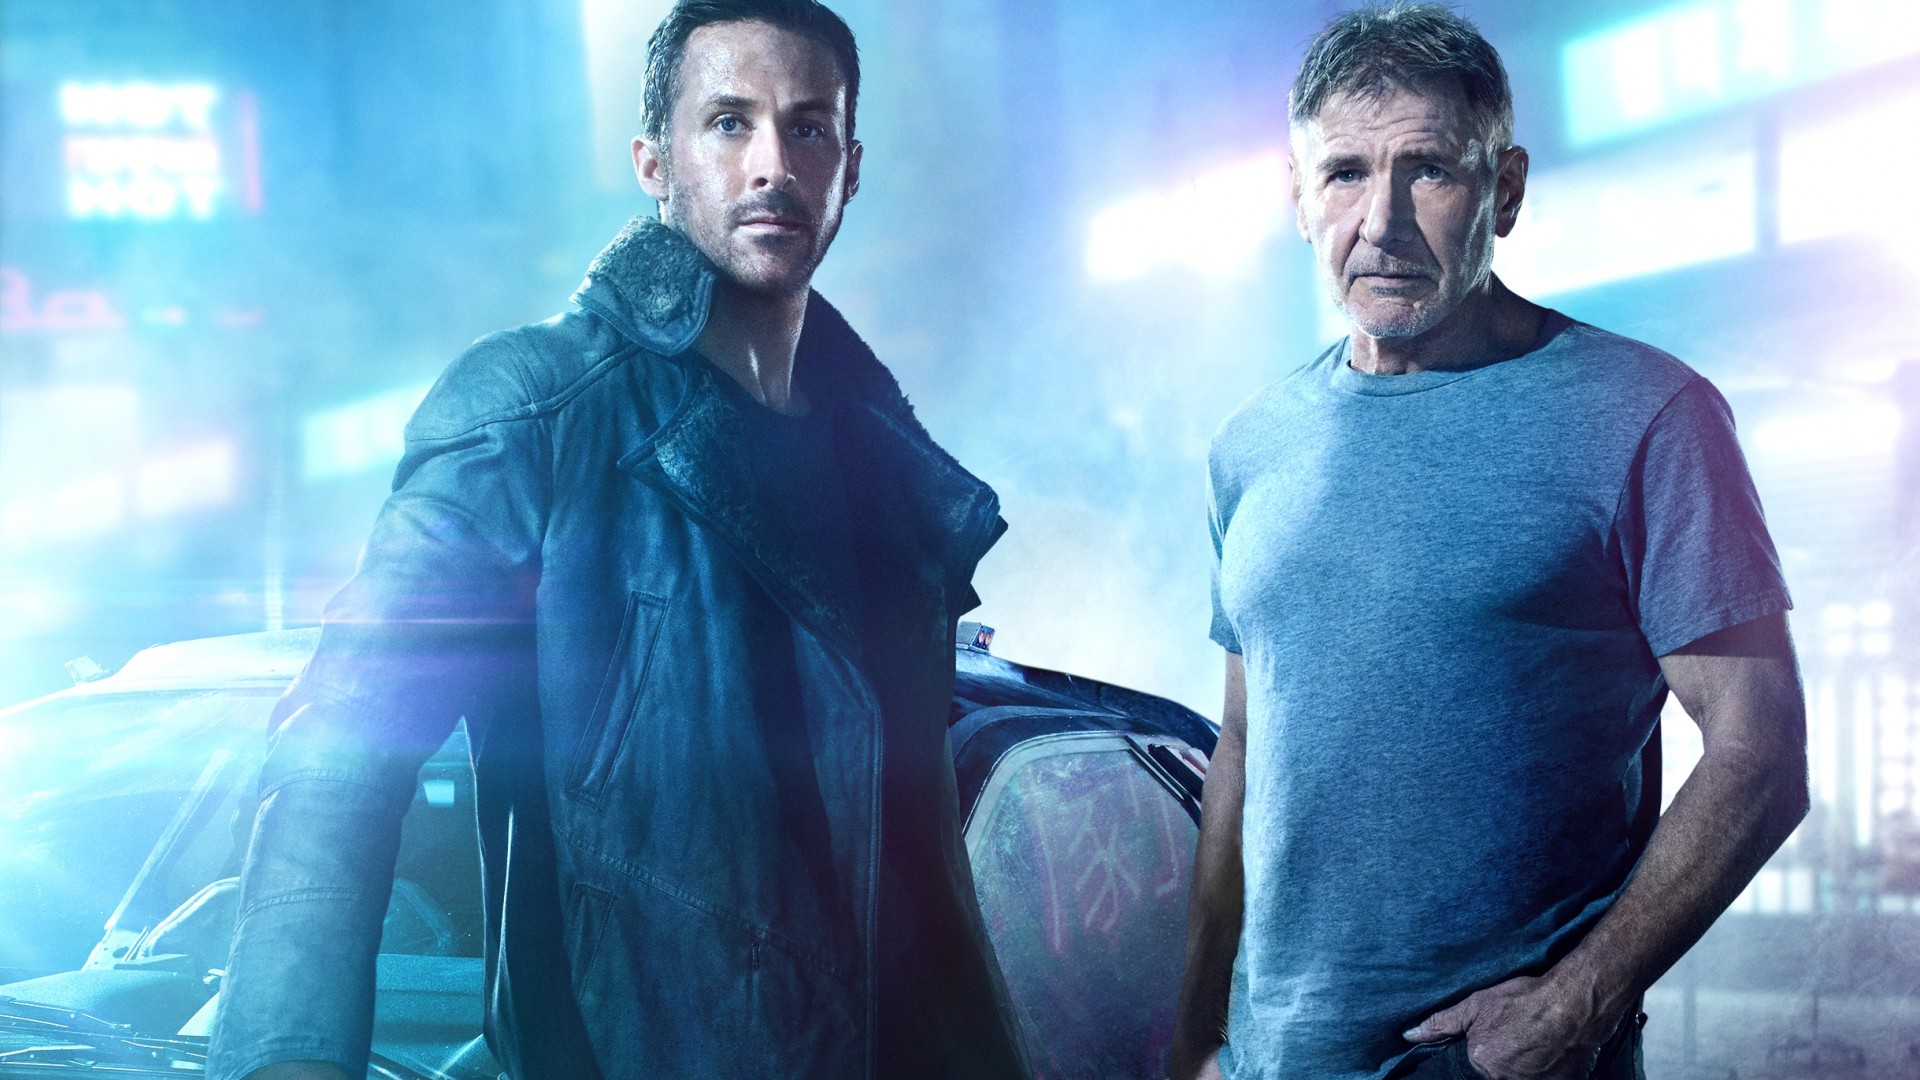 People 1920x1080 Blade Runner Blade Runner 2049 Ryan Gosling Harrison Ford film stills actor movies men